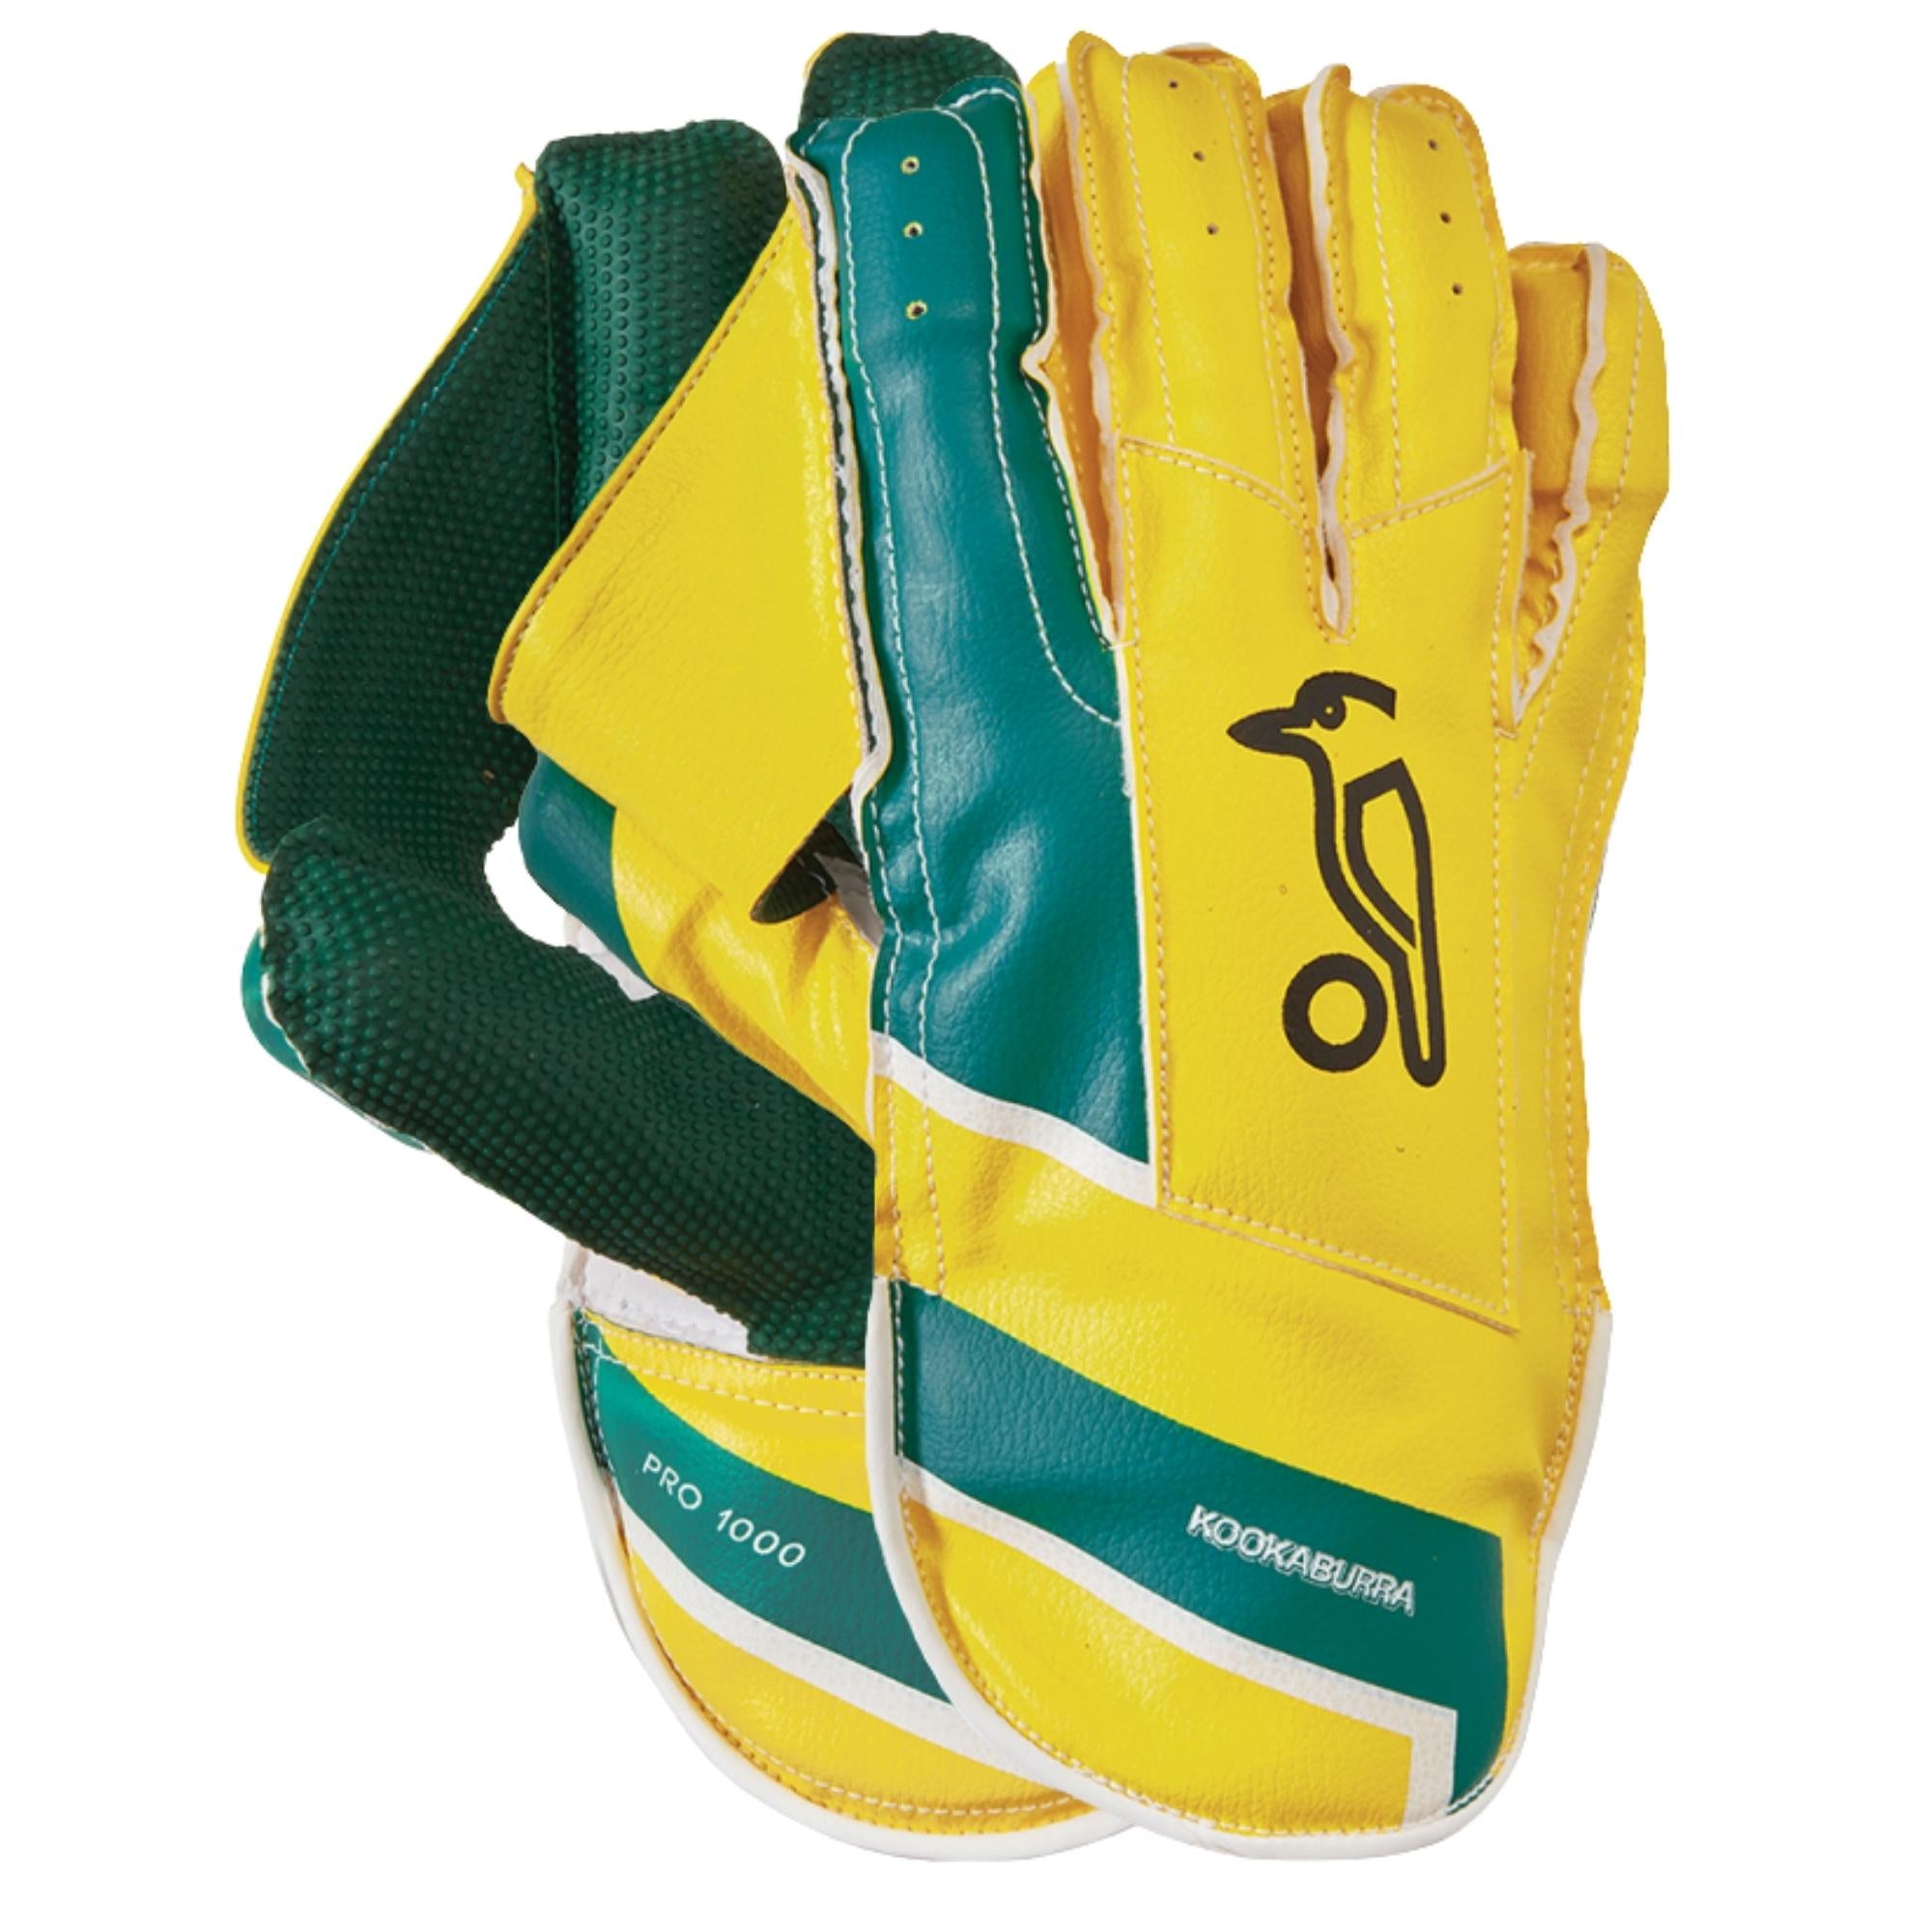 Kookaburra Wicket Keeping Gloves Pro 1000